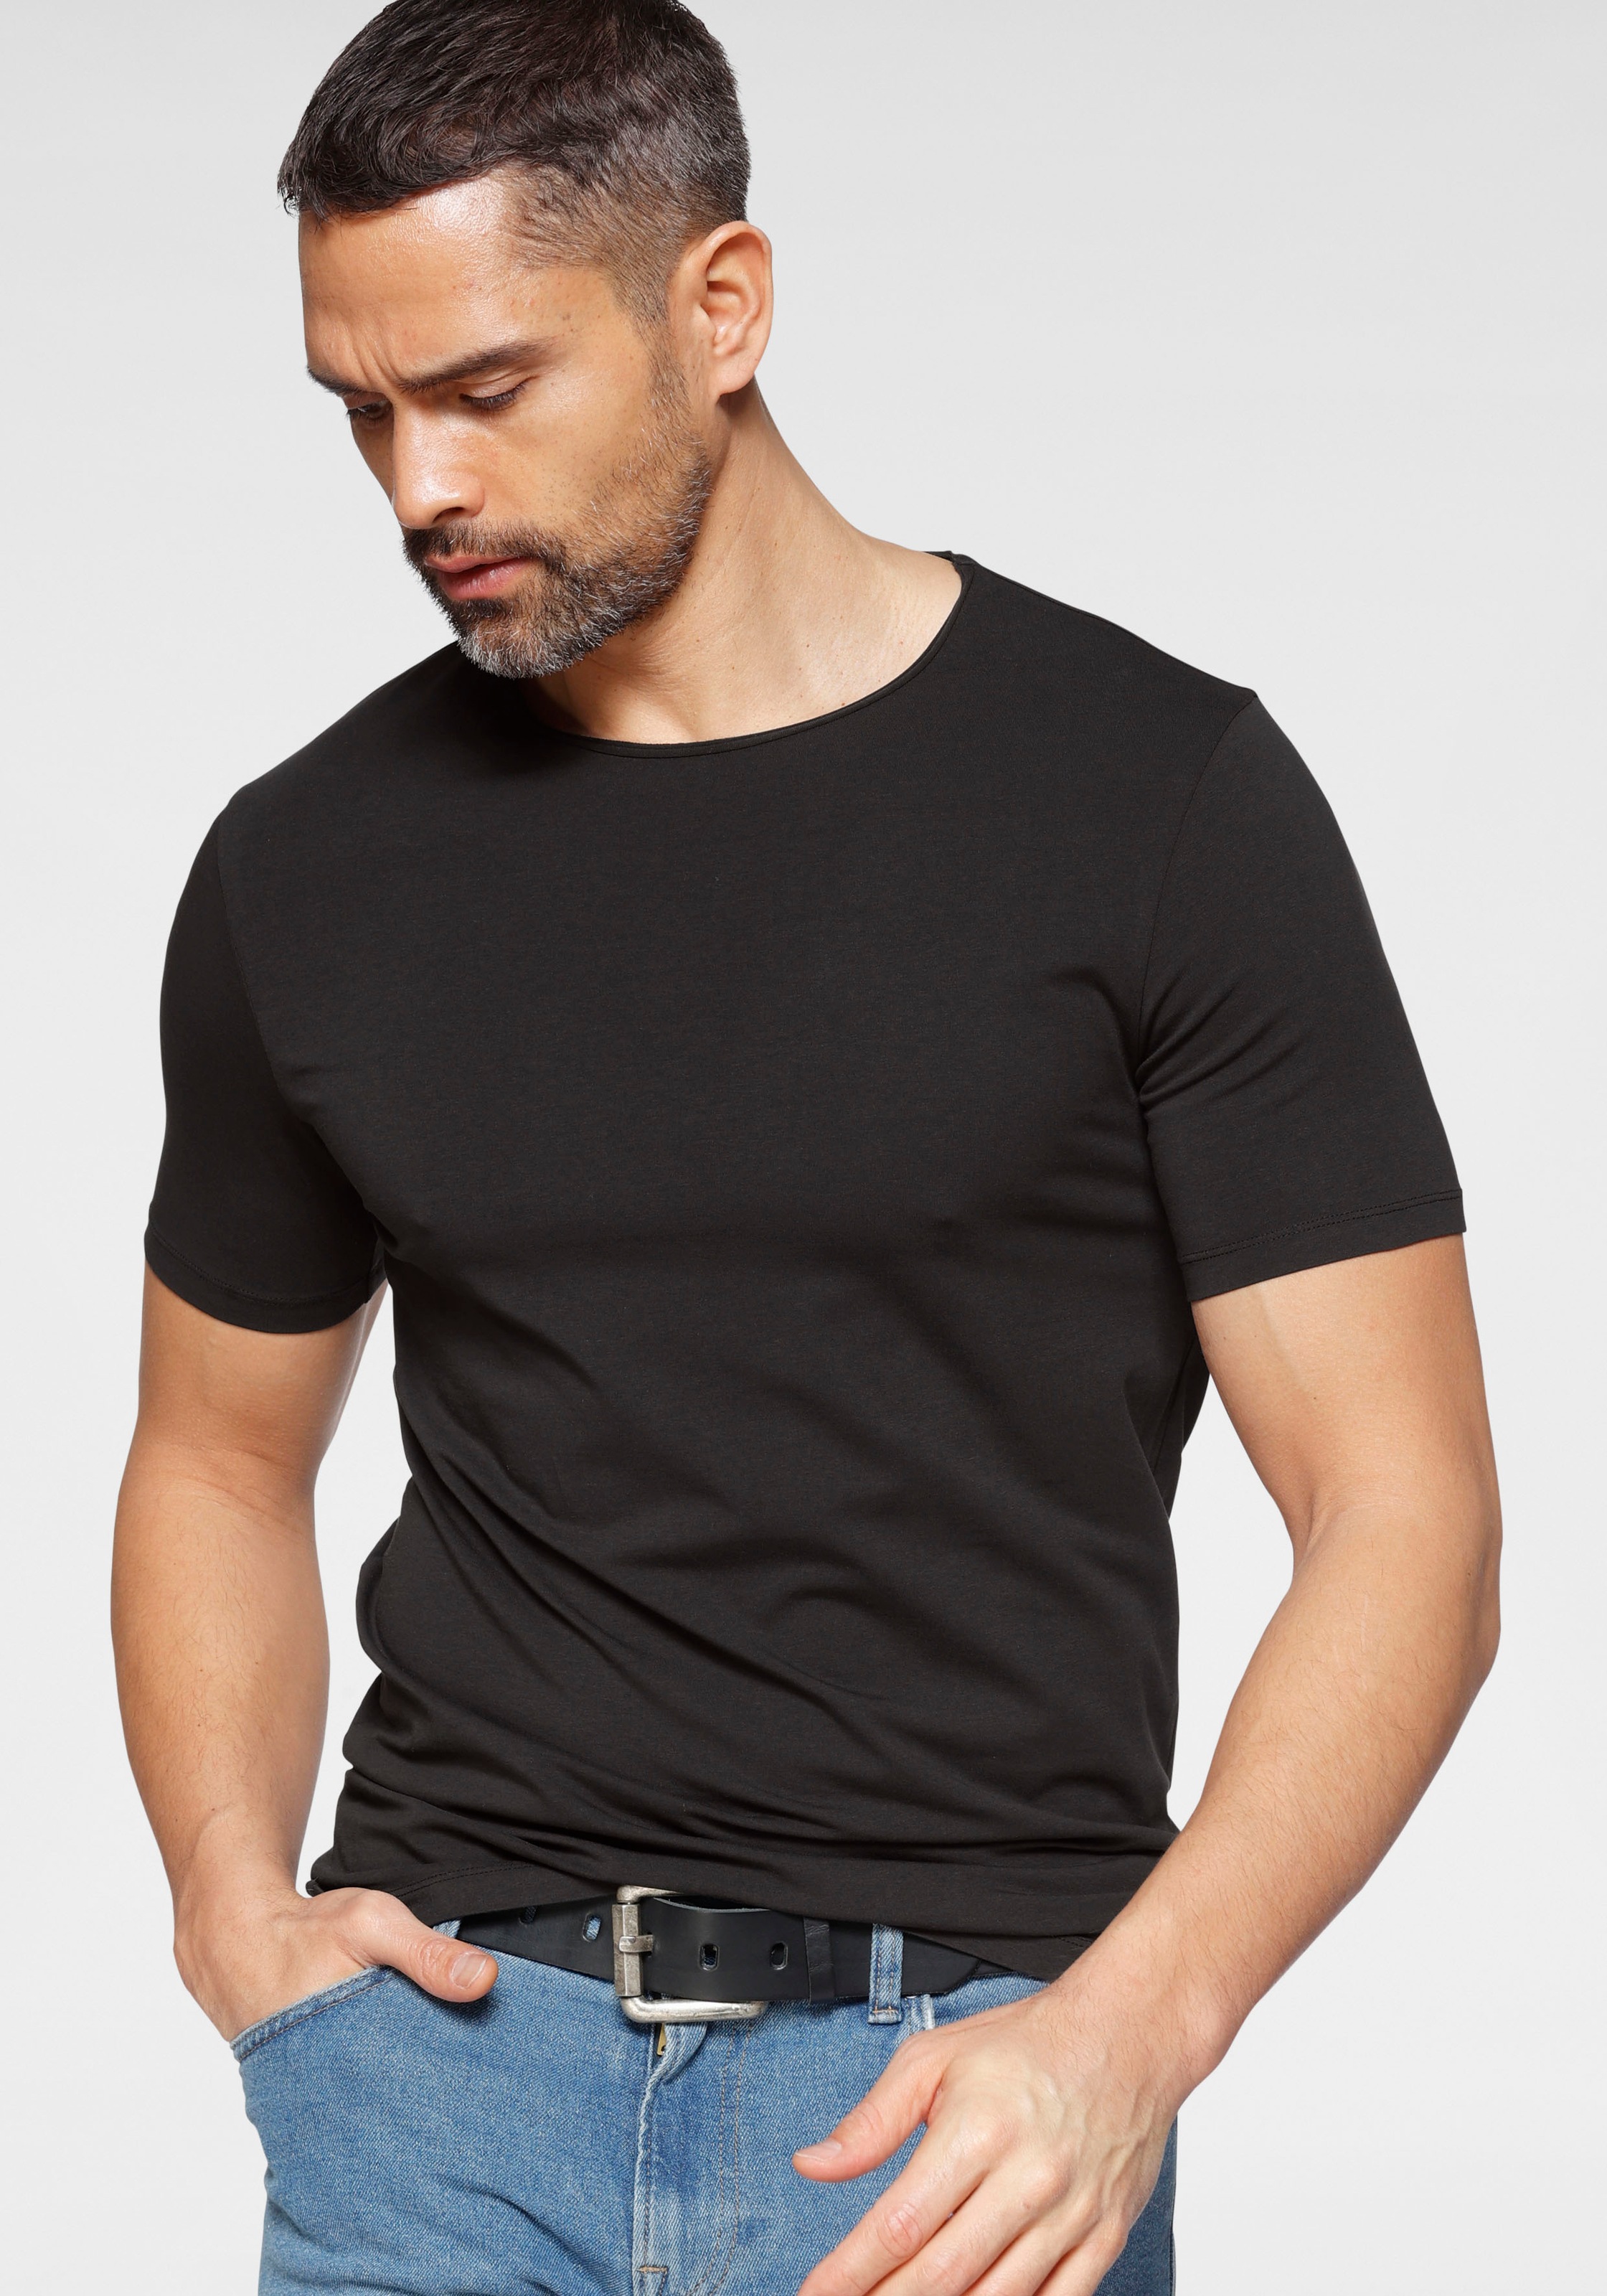 online Jersey T-Shirt body OLYMP fit«, OTTO »Level bei Five bestellen feinem aus